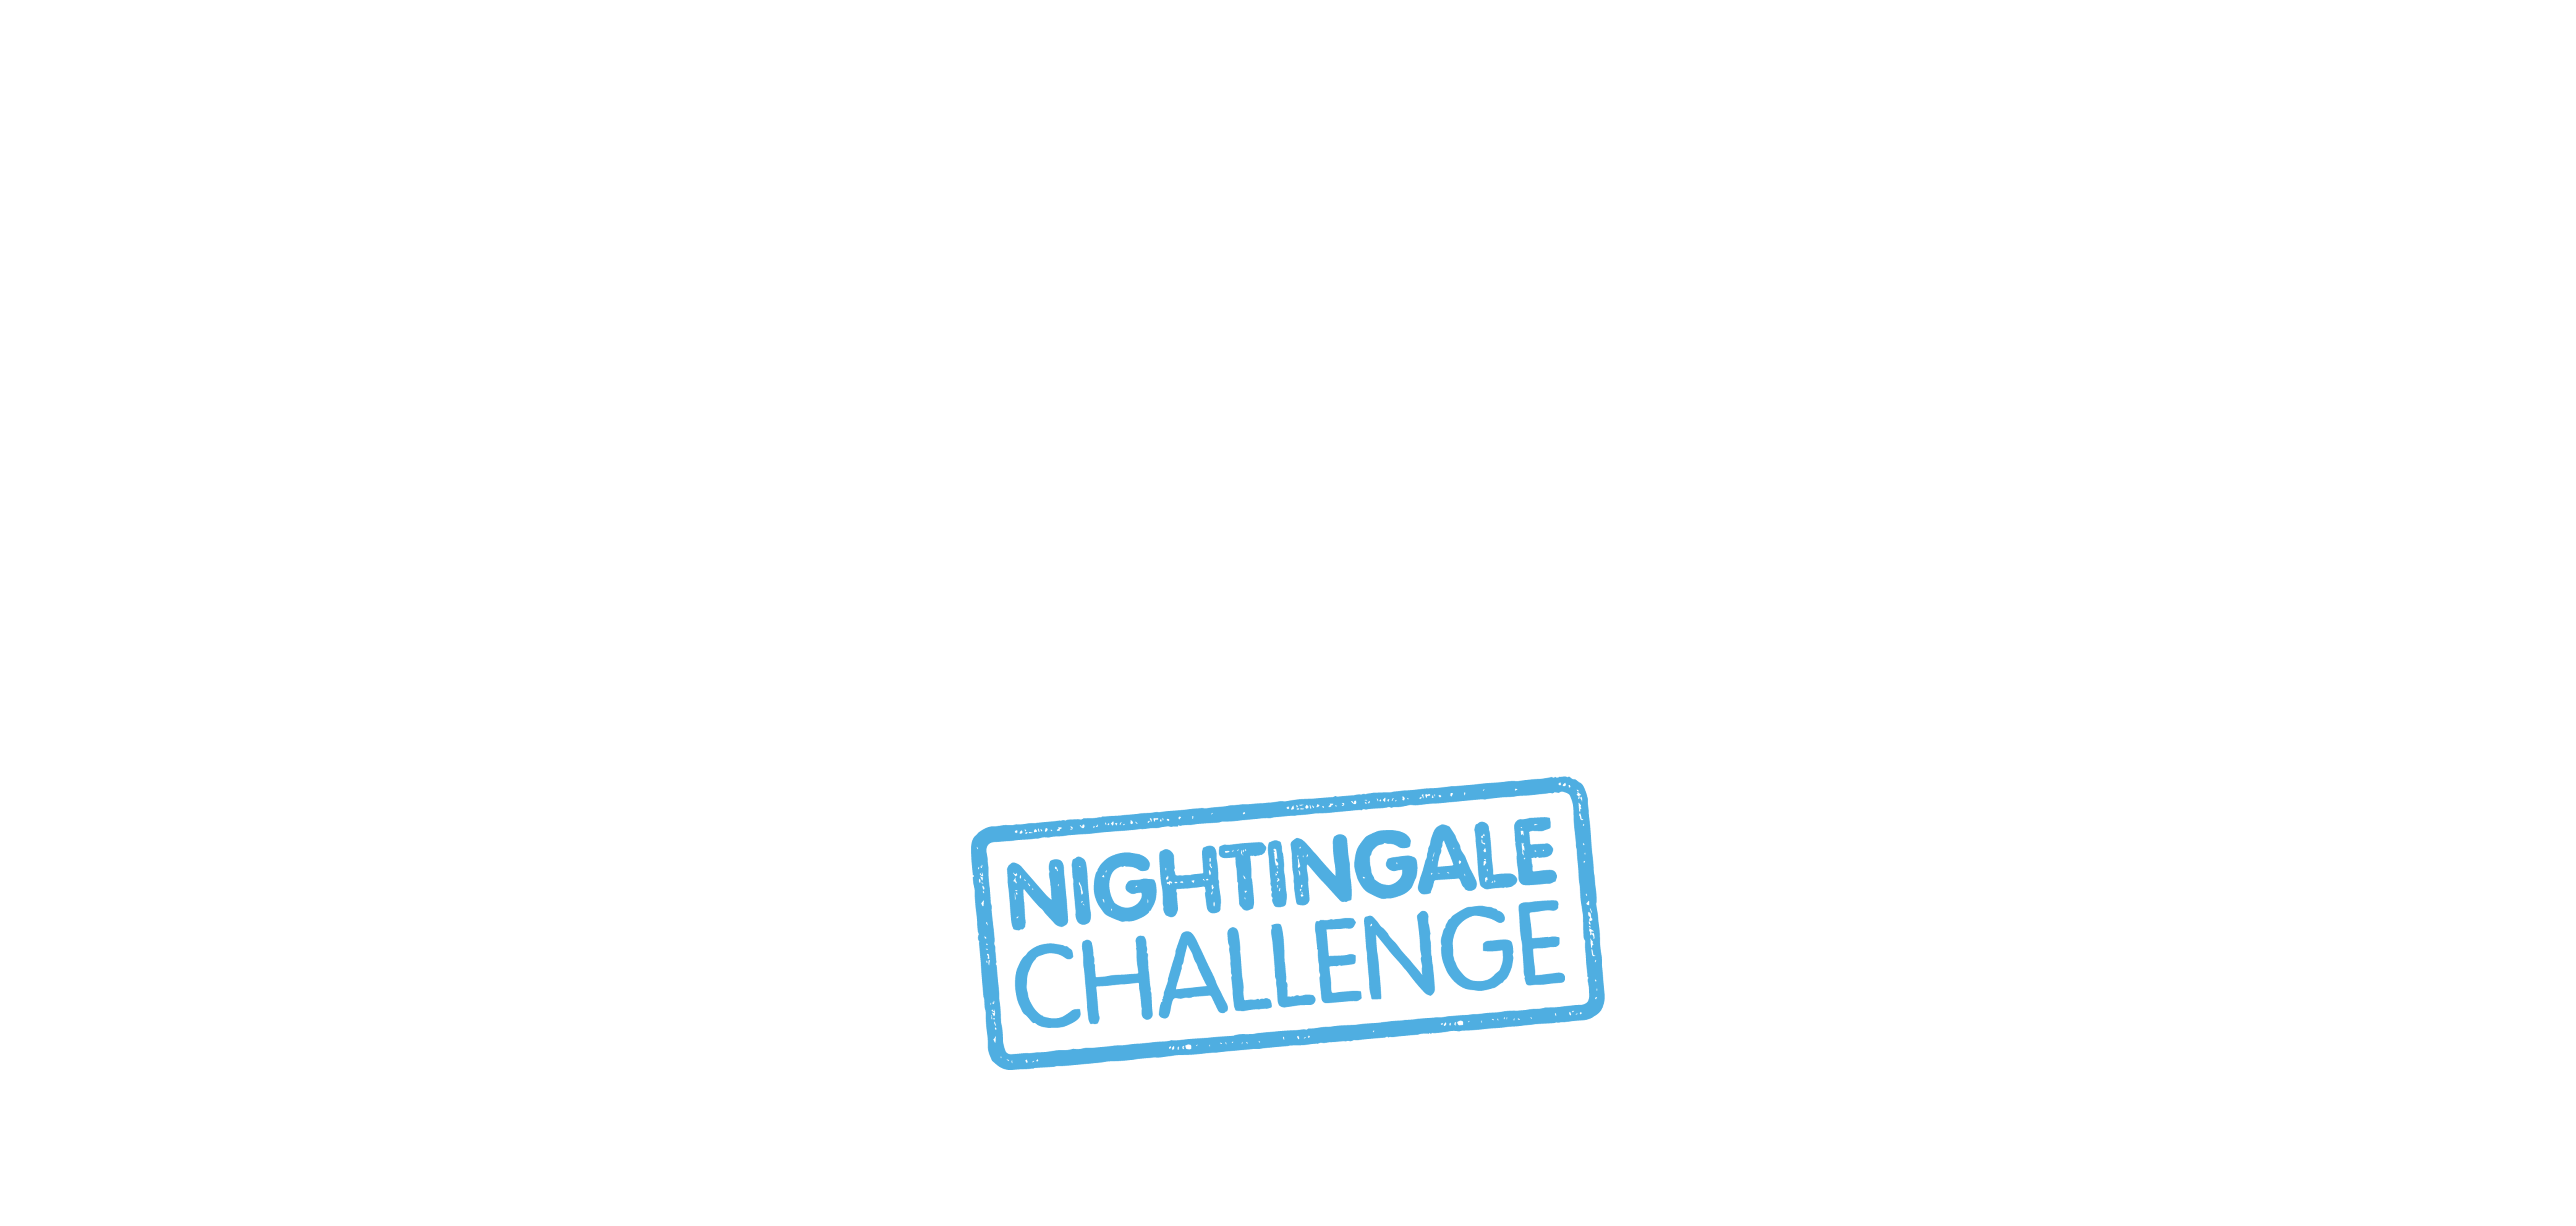 nightingale-challenge-banner-title-04